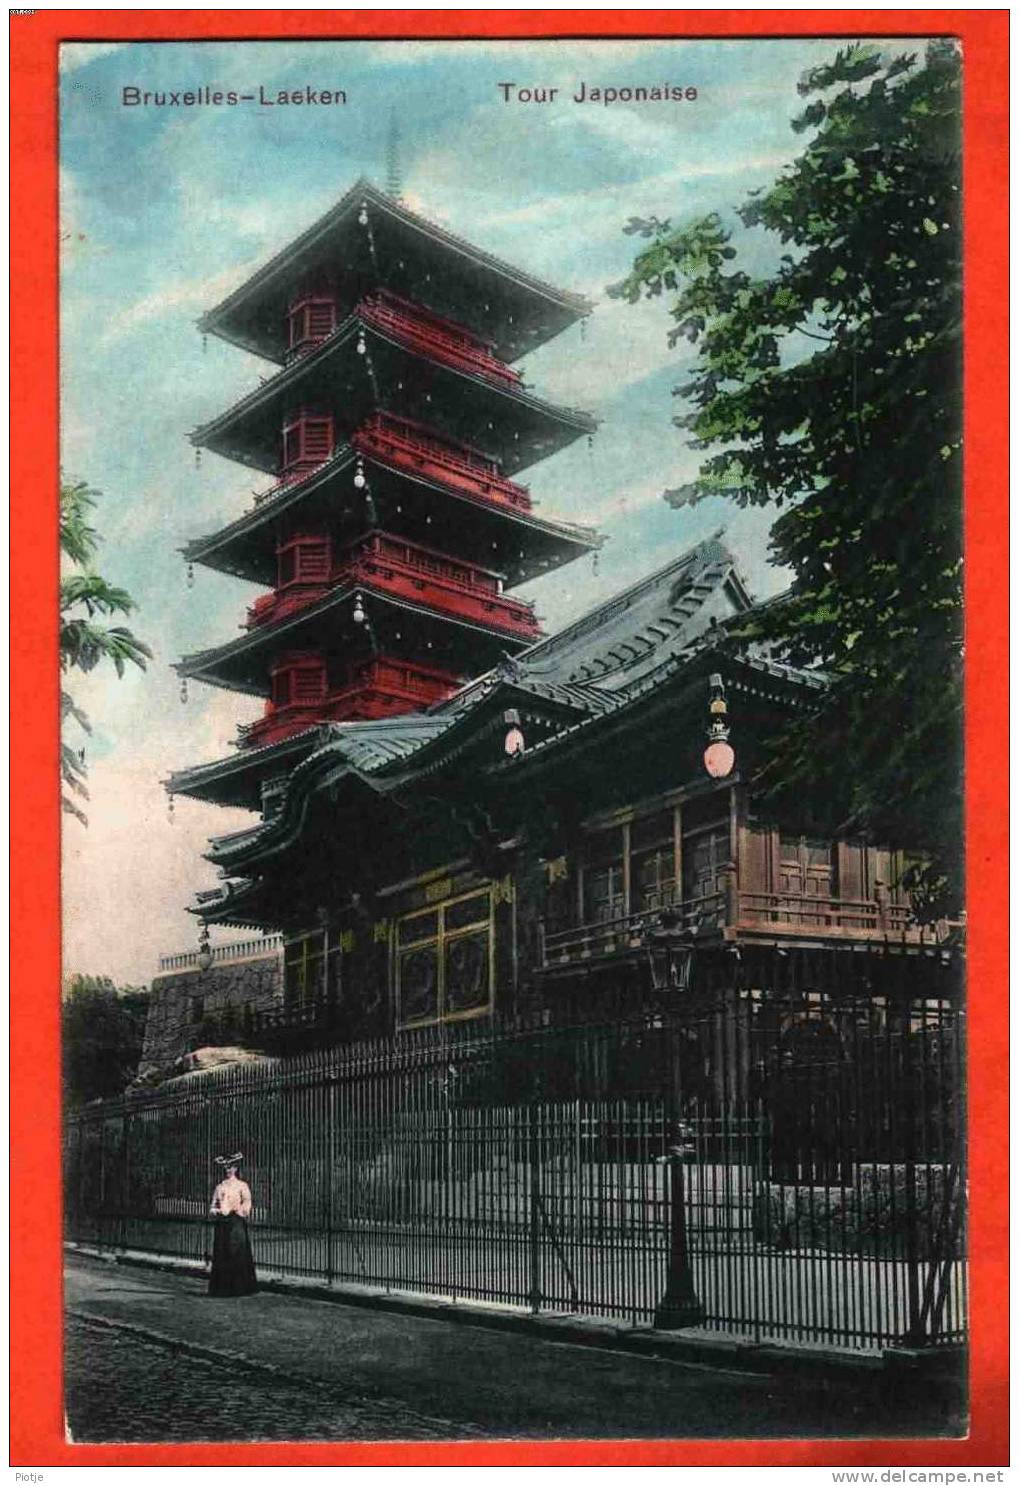 * Laeken - Laken * Brussel, Bruxelles, (1907 Imp. Heiss & Co Cologne) Tour Japonaise, Japan, Toren, Tower, Fence, Old - Laeken